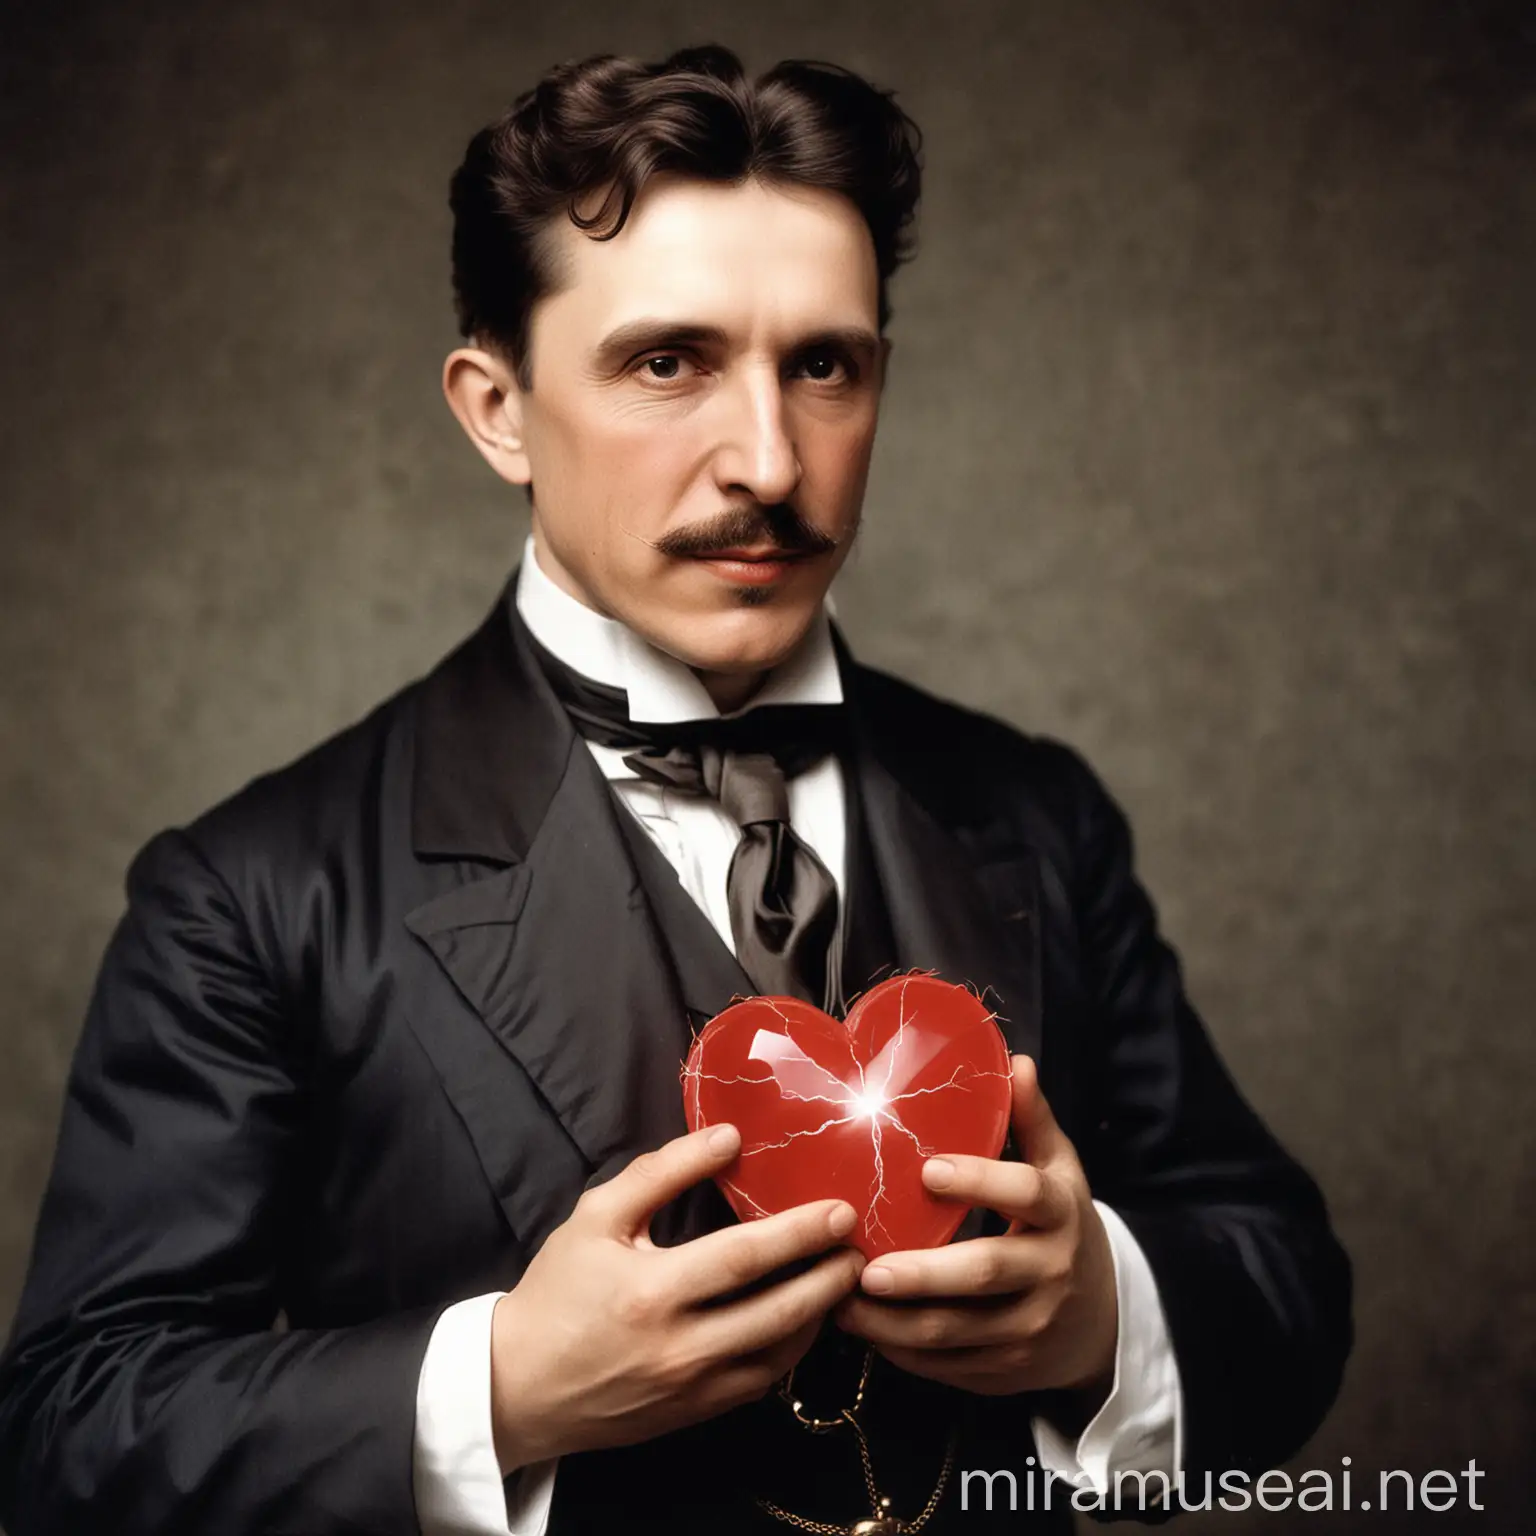 Nicola Tesla with holding a heart coloured imagem